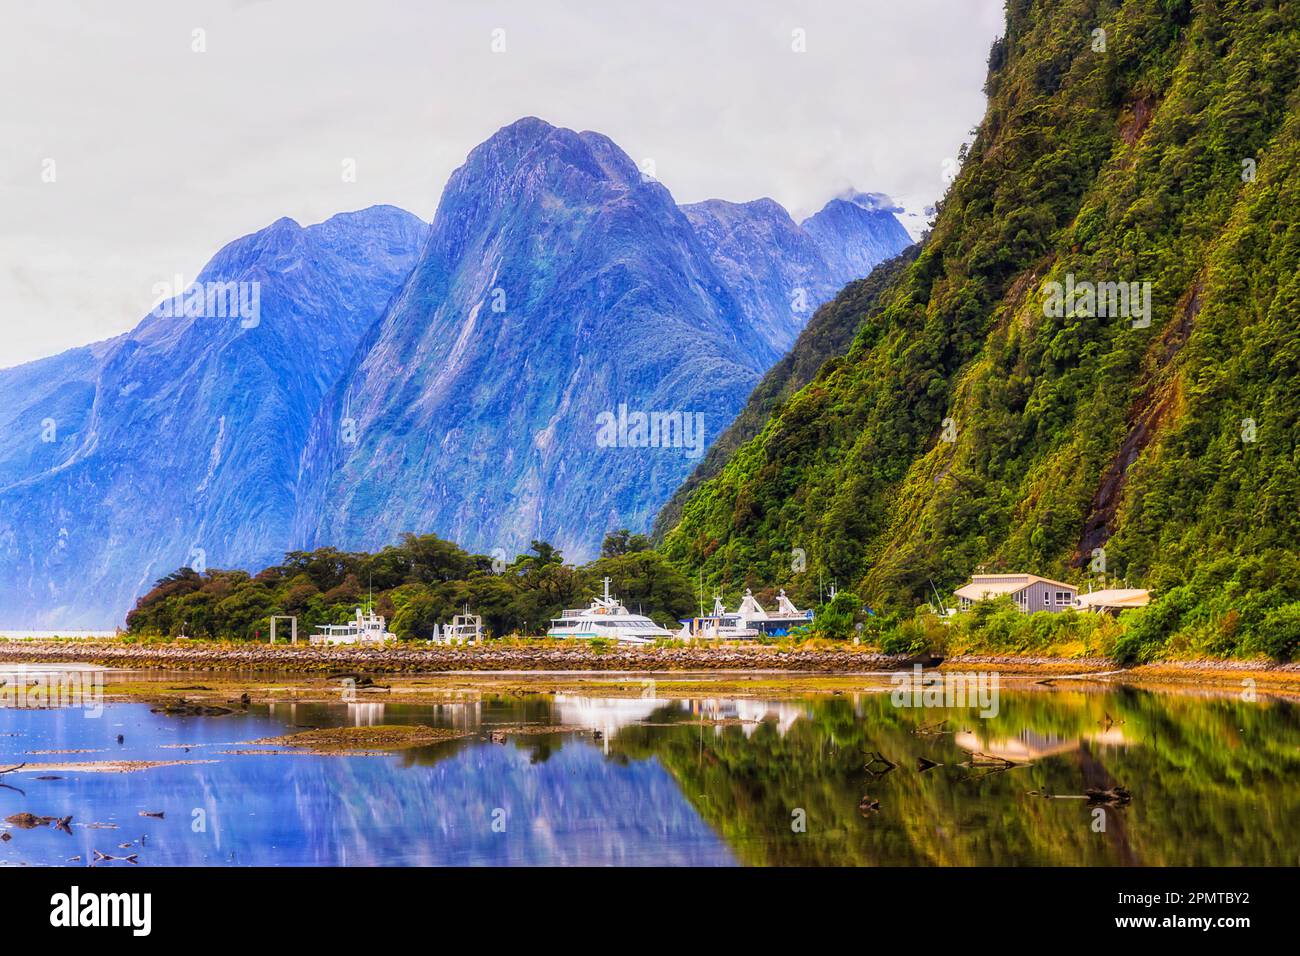 Milford Sound cruise boats passenger tourism terminal under tall mountain peak - South Island of New Zealand. Stock Photo